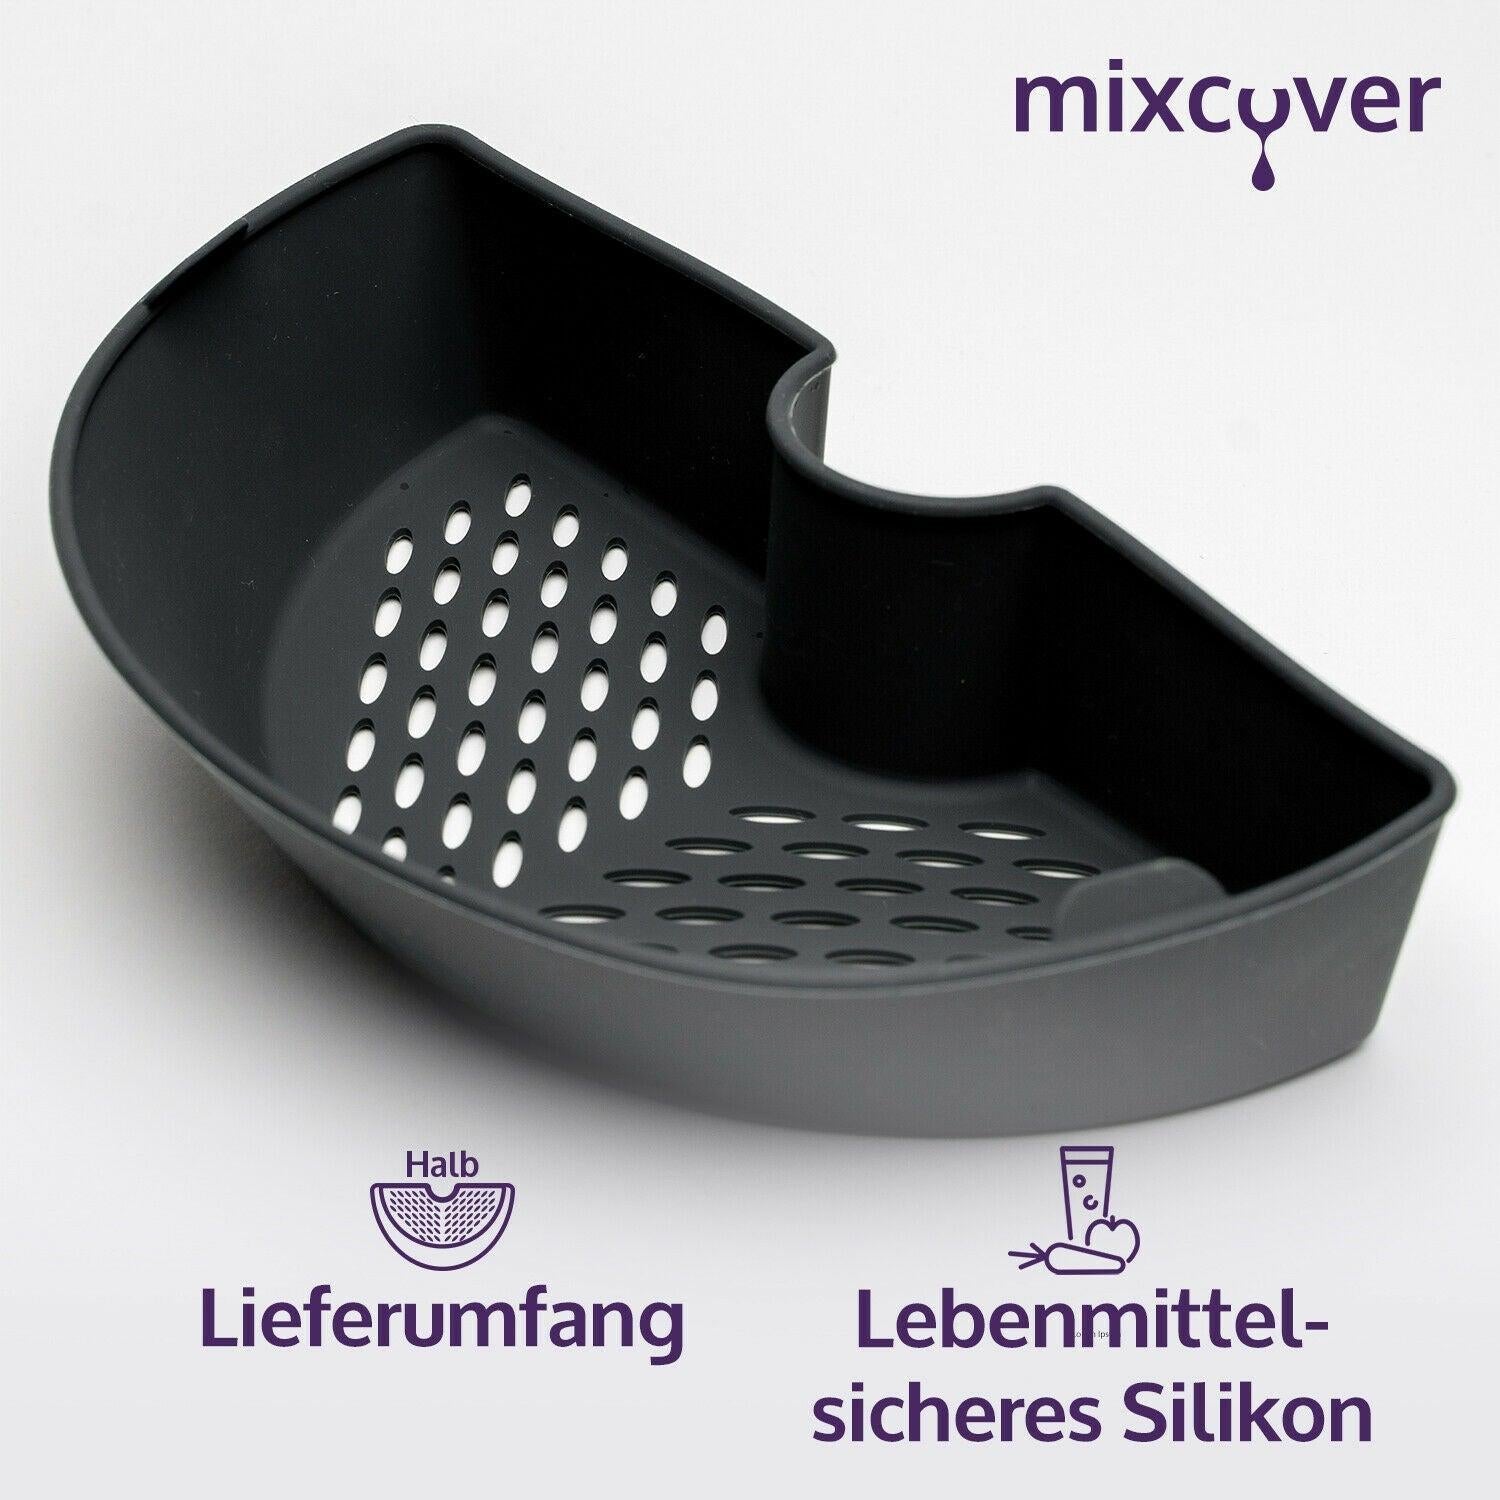 mixcover Garraumteiler (HALB) für Bosch Cookit Dampfgarraum - Mixcover - Mixcover